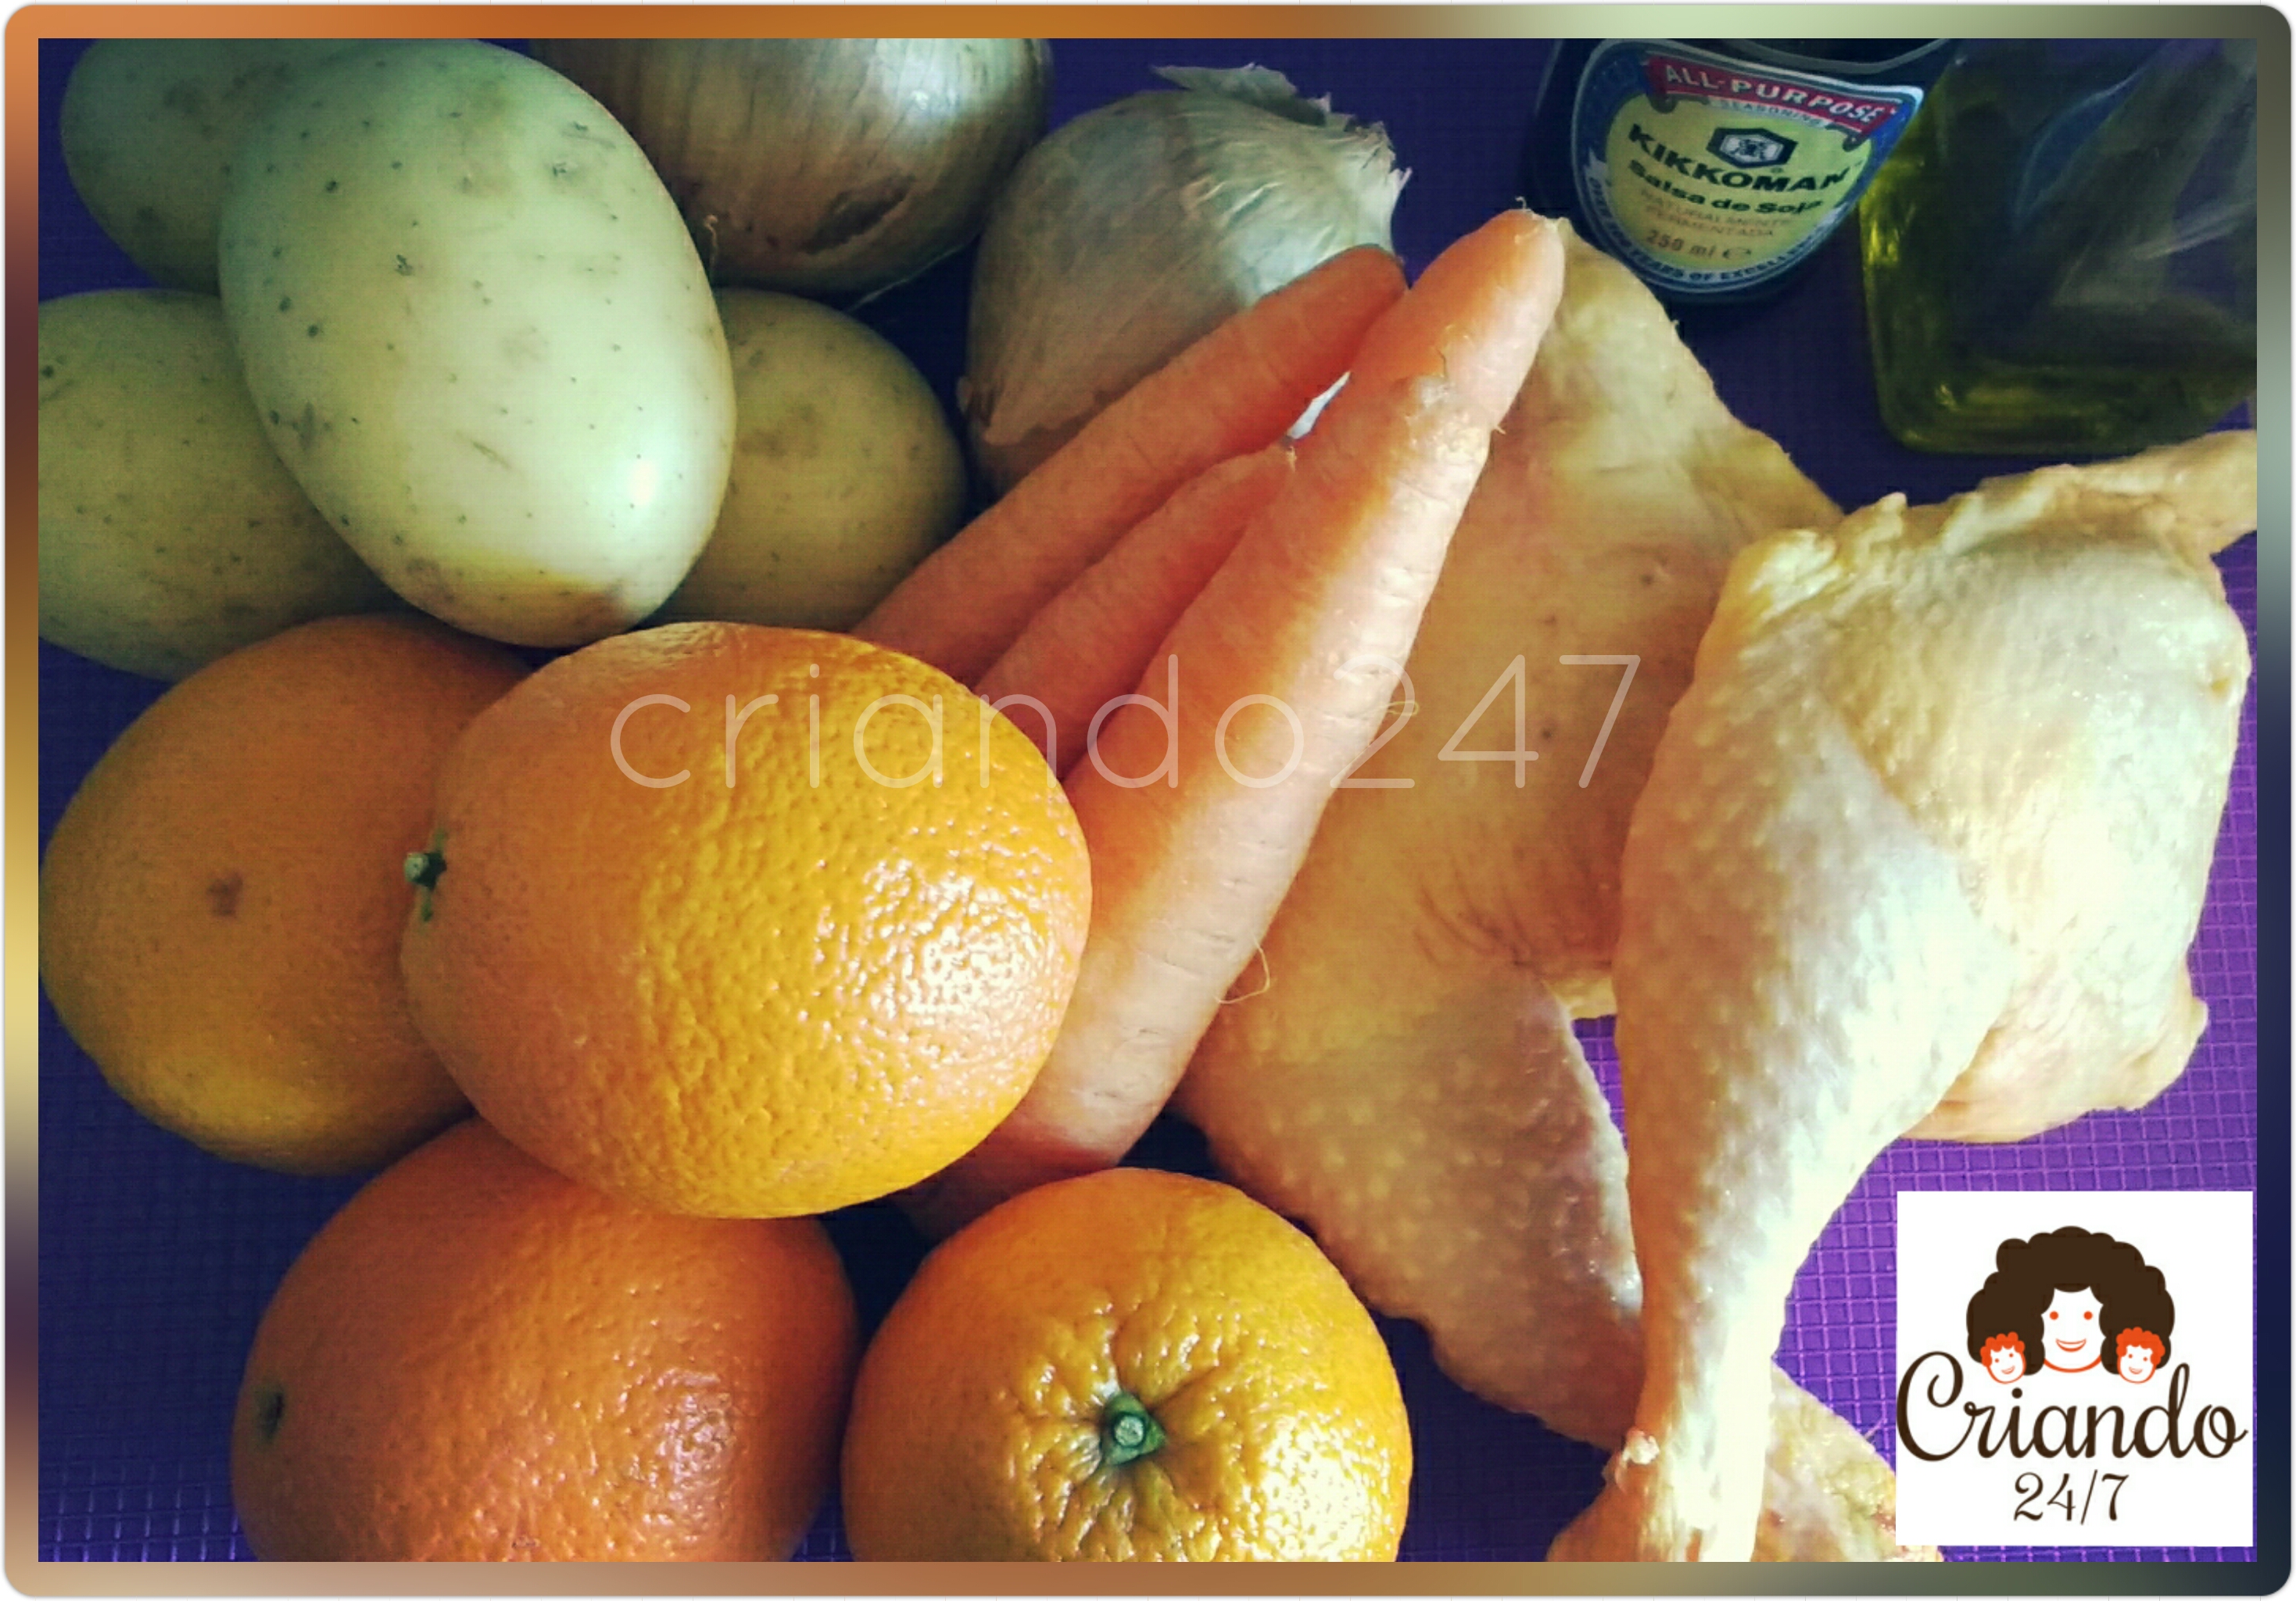 Criando247 RecetaFacil Pollo NaranjaSoja-1